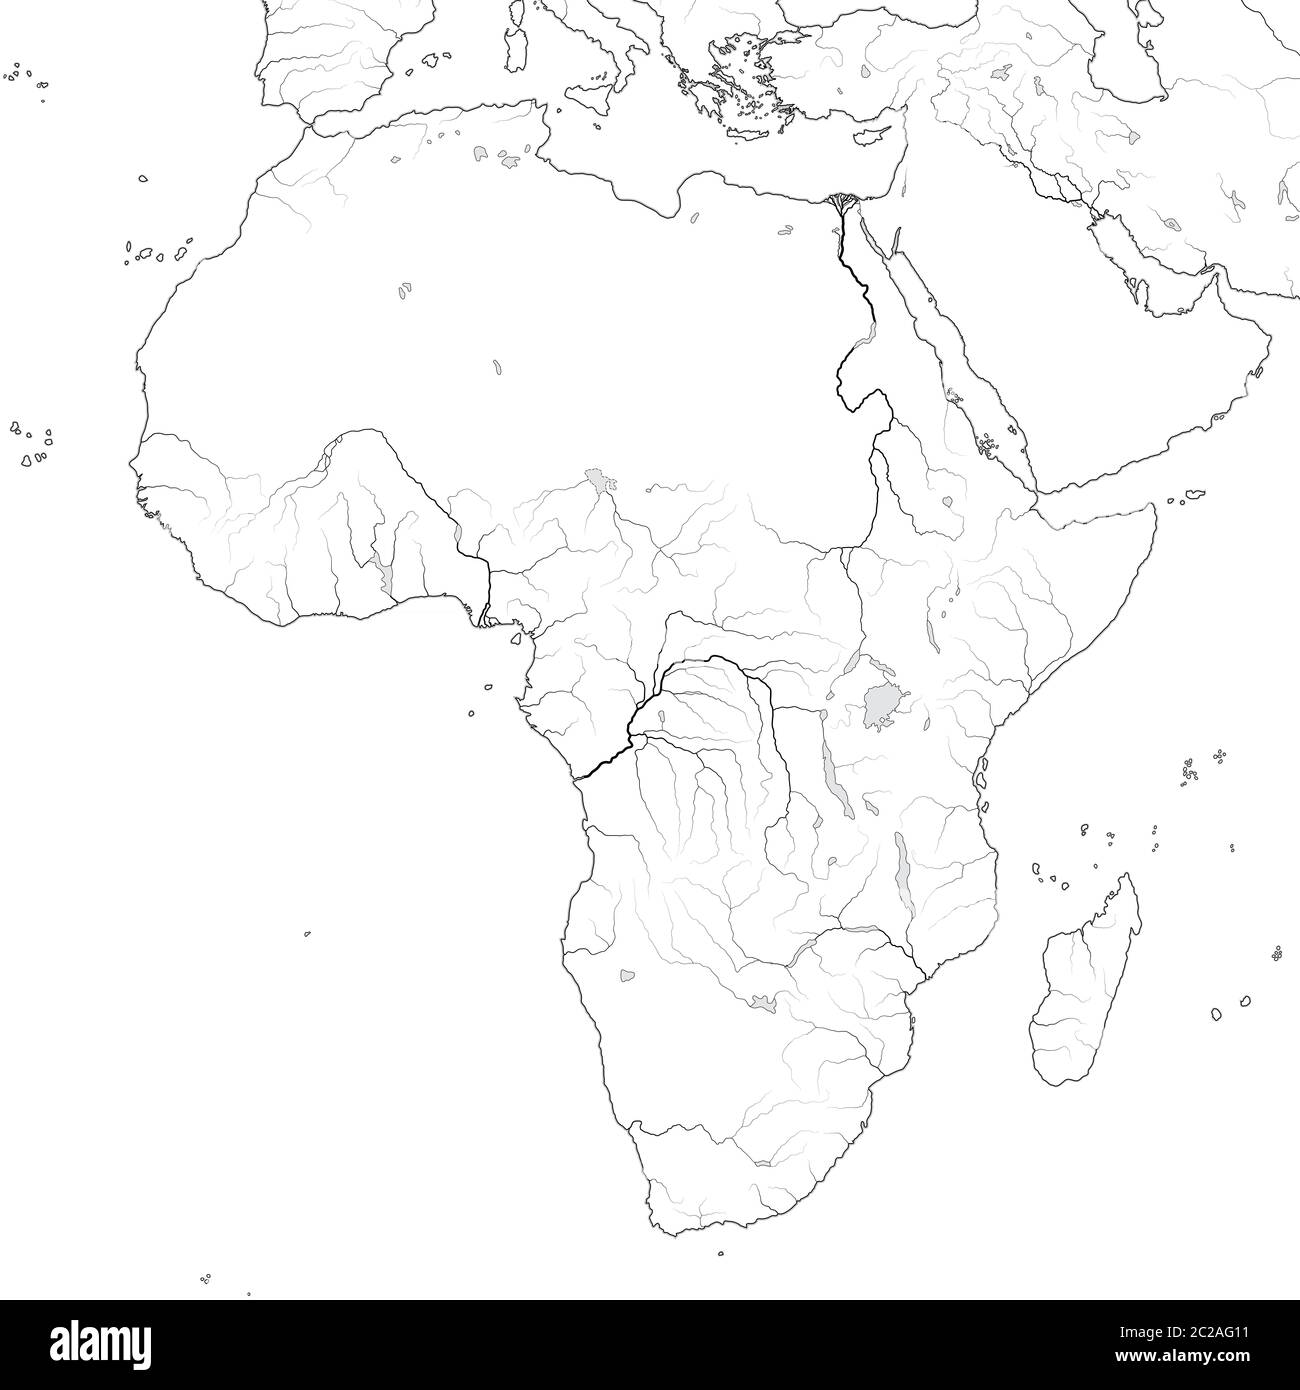 Mappa mondiale DELL'AFRICA: Egitto, Libia, Etiopia, Arabia, Mauritania, Nigeria, Somalia. Grafico XXL geografico. Foto Stock